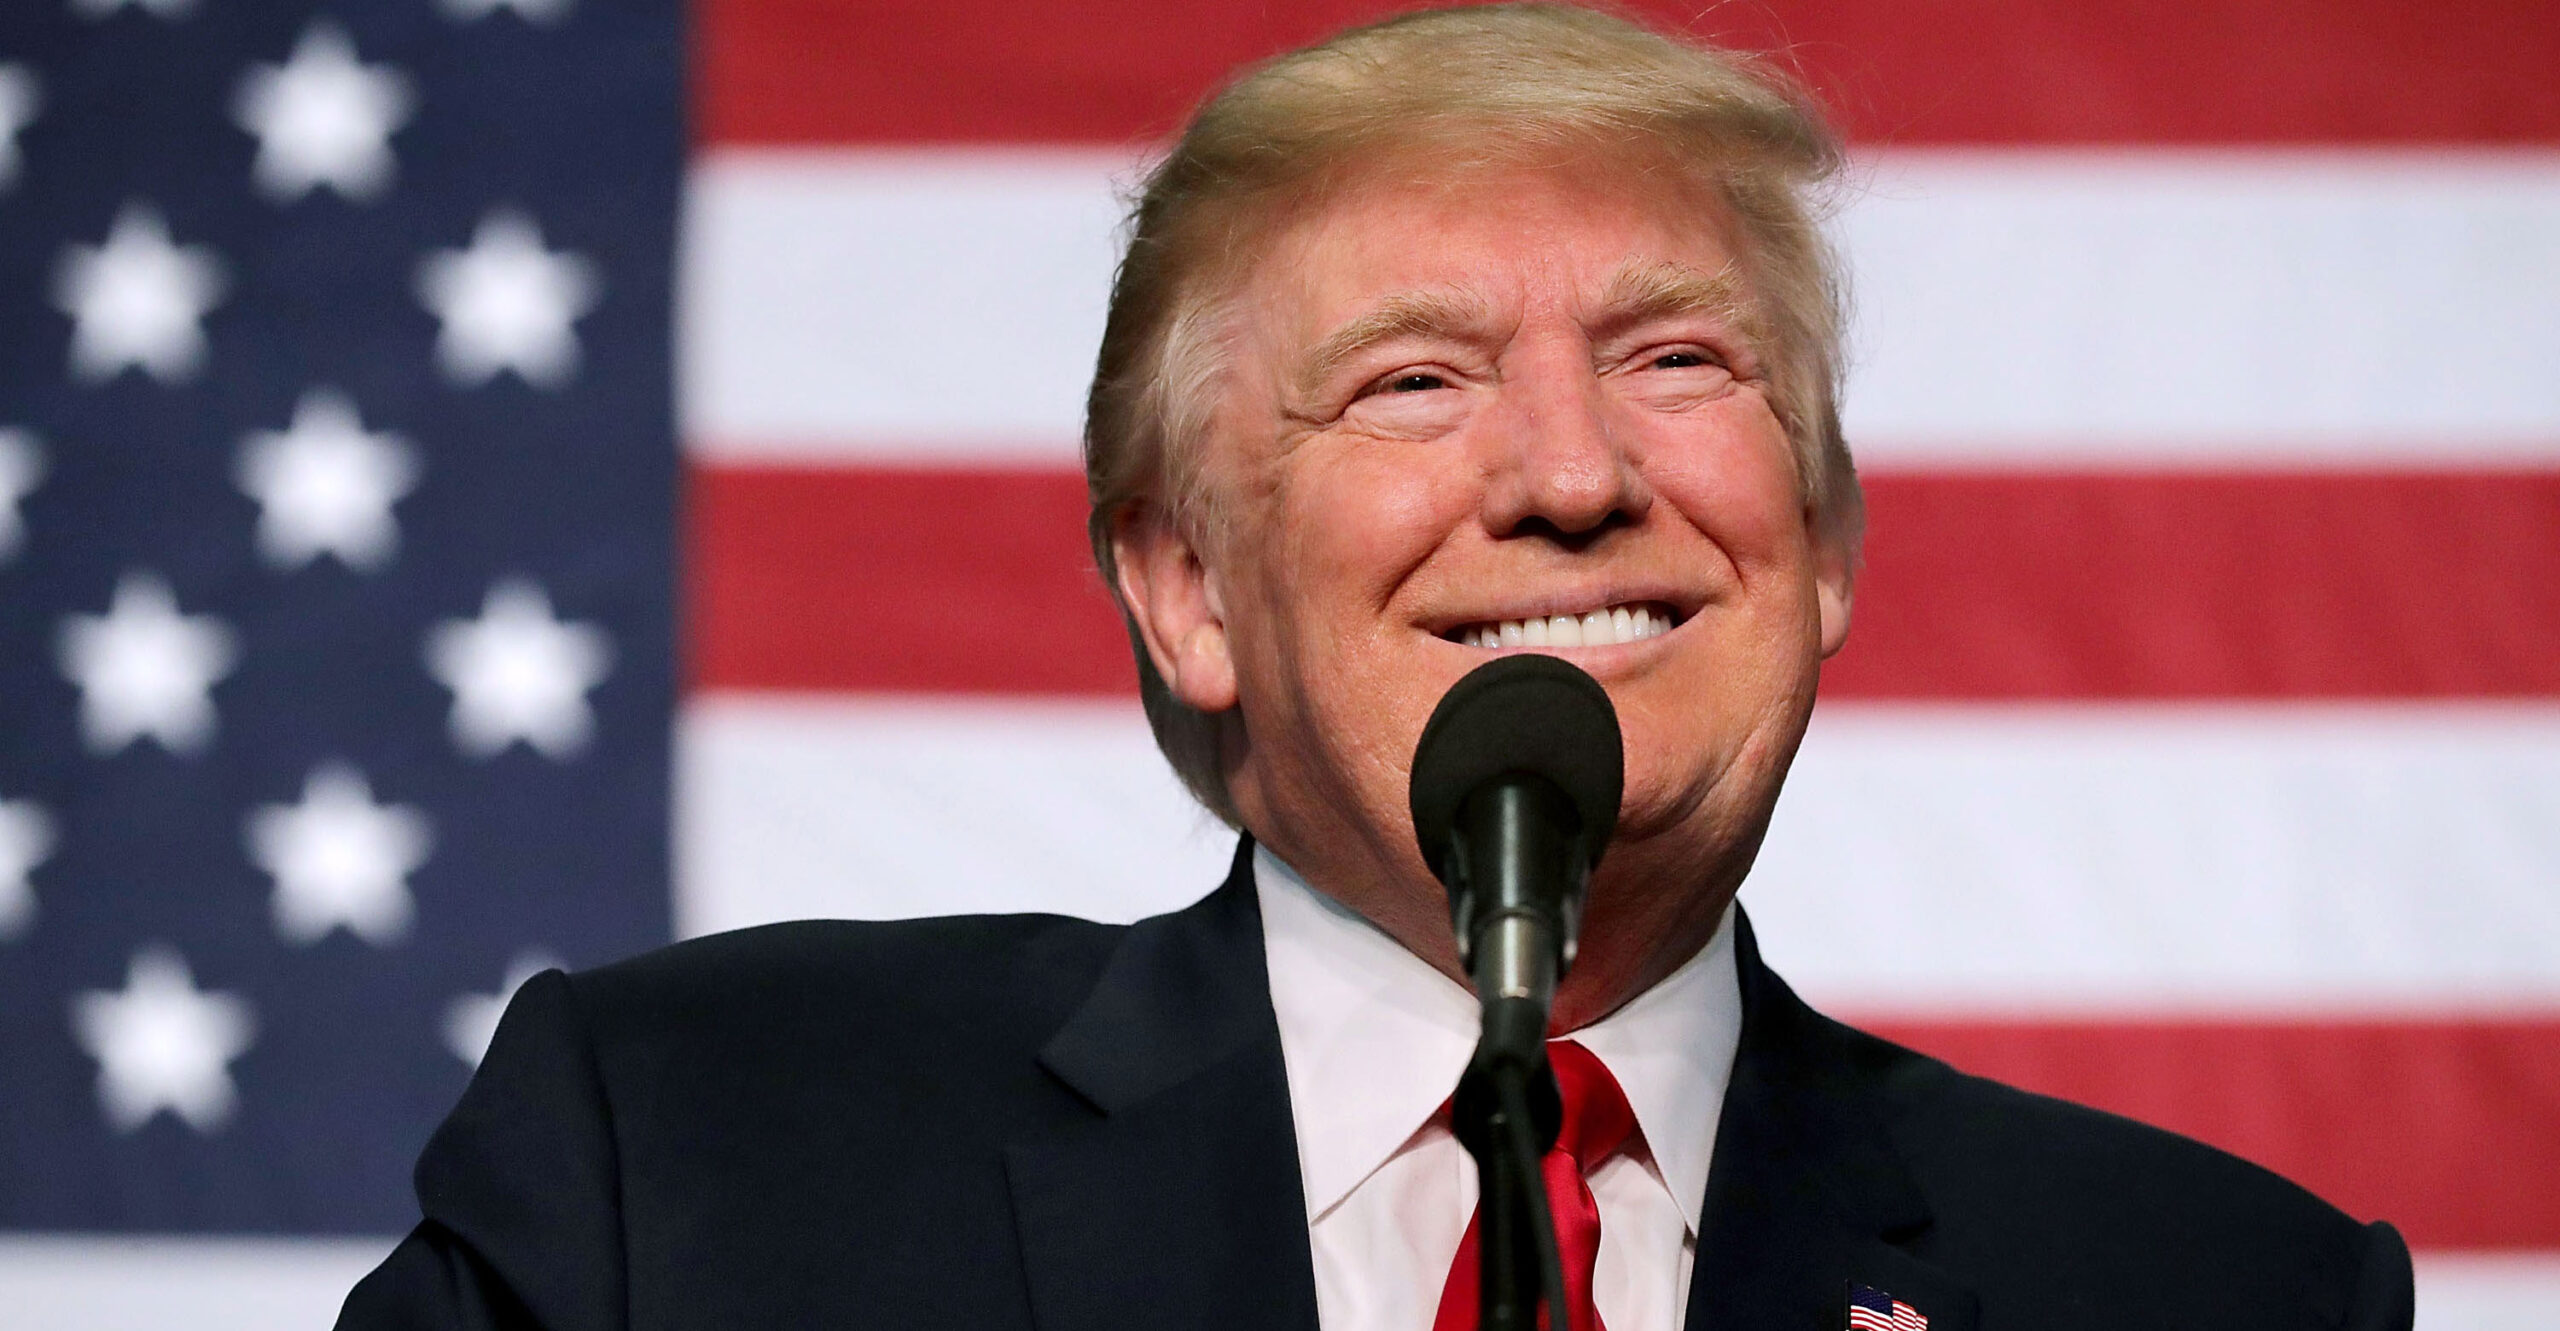 Donald Trump Announces He Will Run for President Again